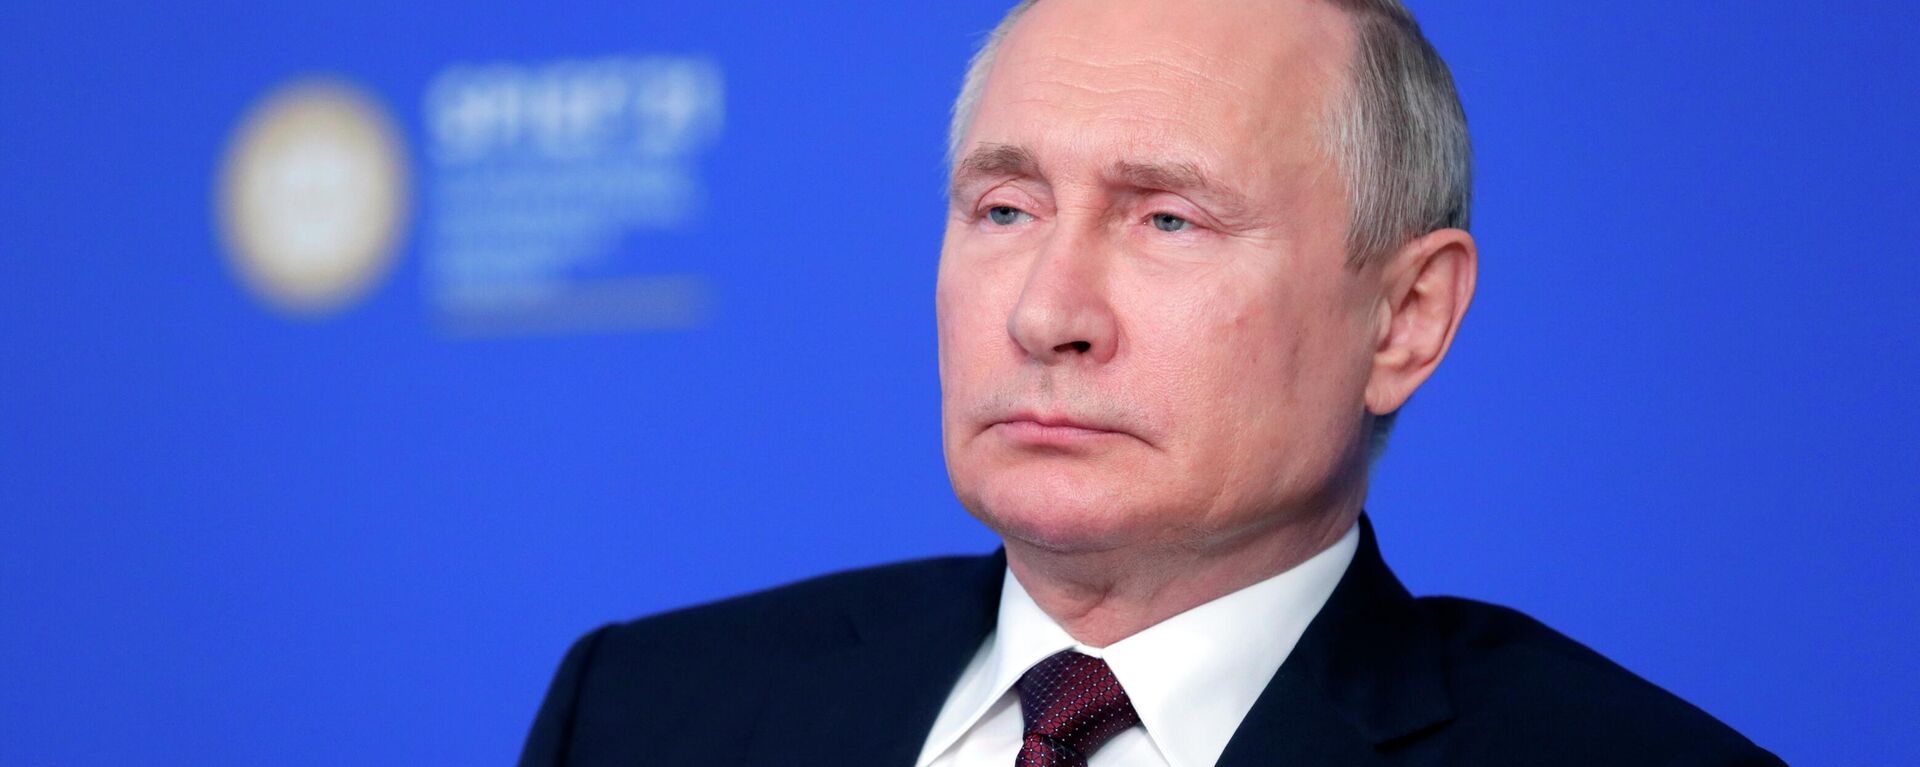 Vladímir Putin, presidente de Rusia - Sputnik Mundo, 1920, 05.06.2021